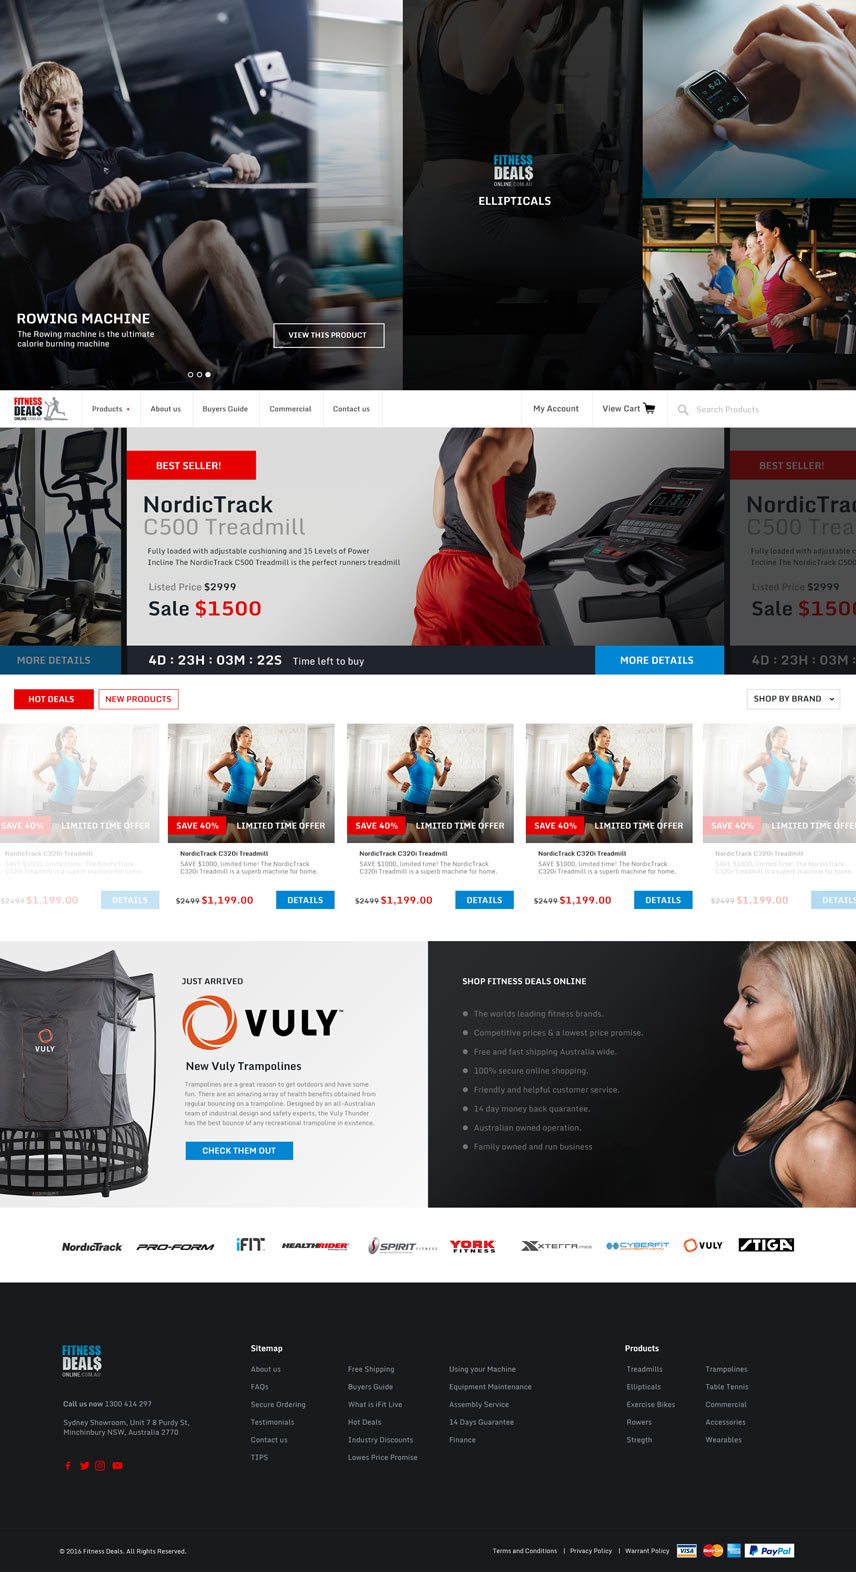 Fitness Deals website design